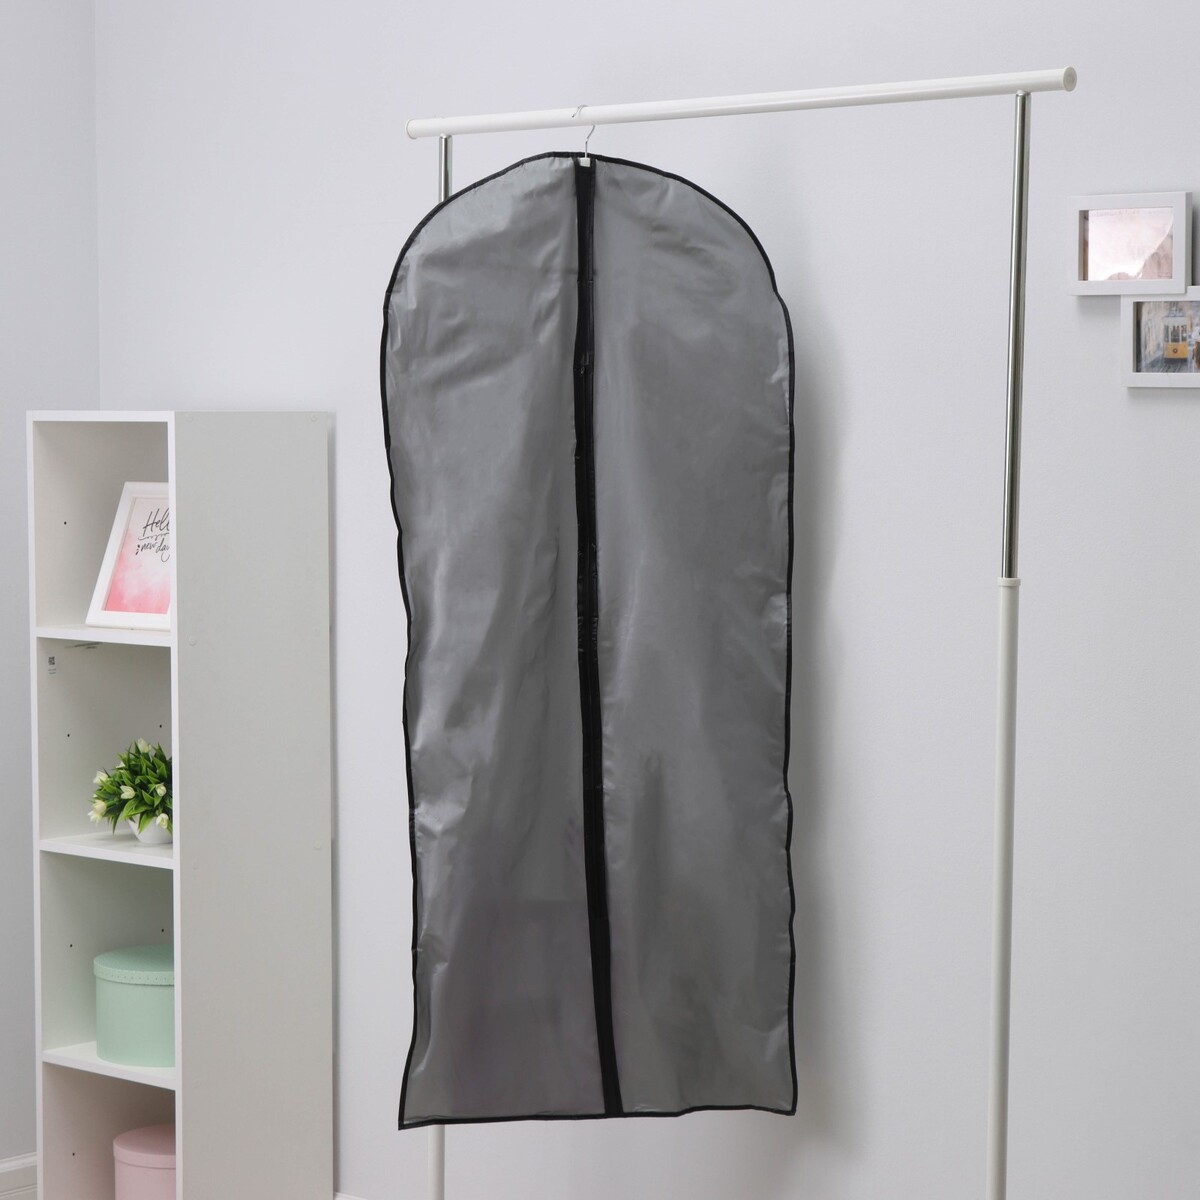 Чехол для одежды ladо́m, 60×137 см, плотный, peva, цвет серый чехол для одежды ladо́m 60×160 см плотный peva